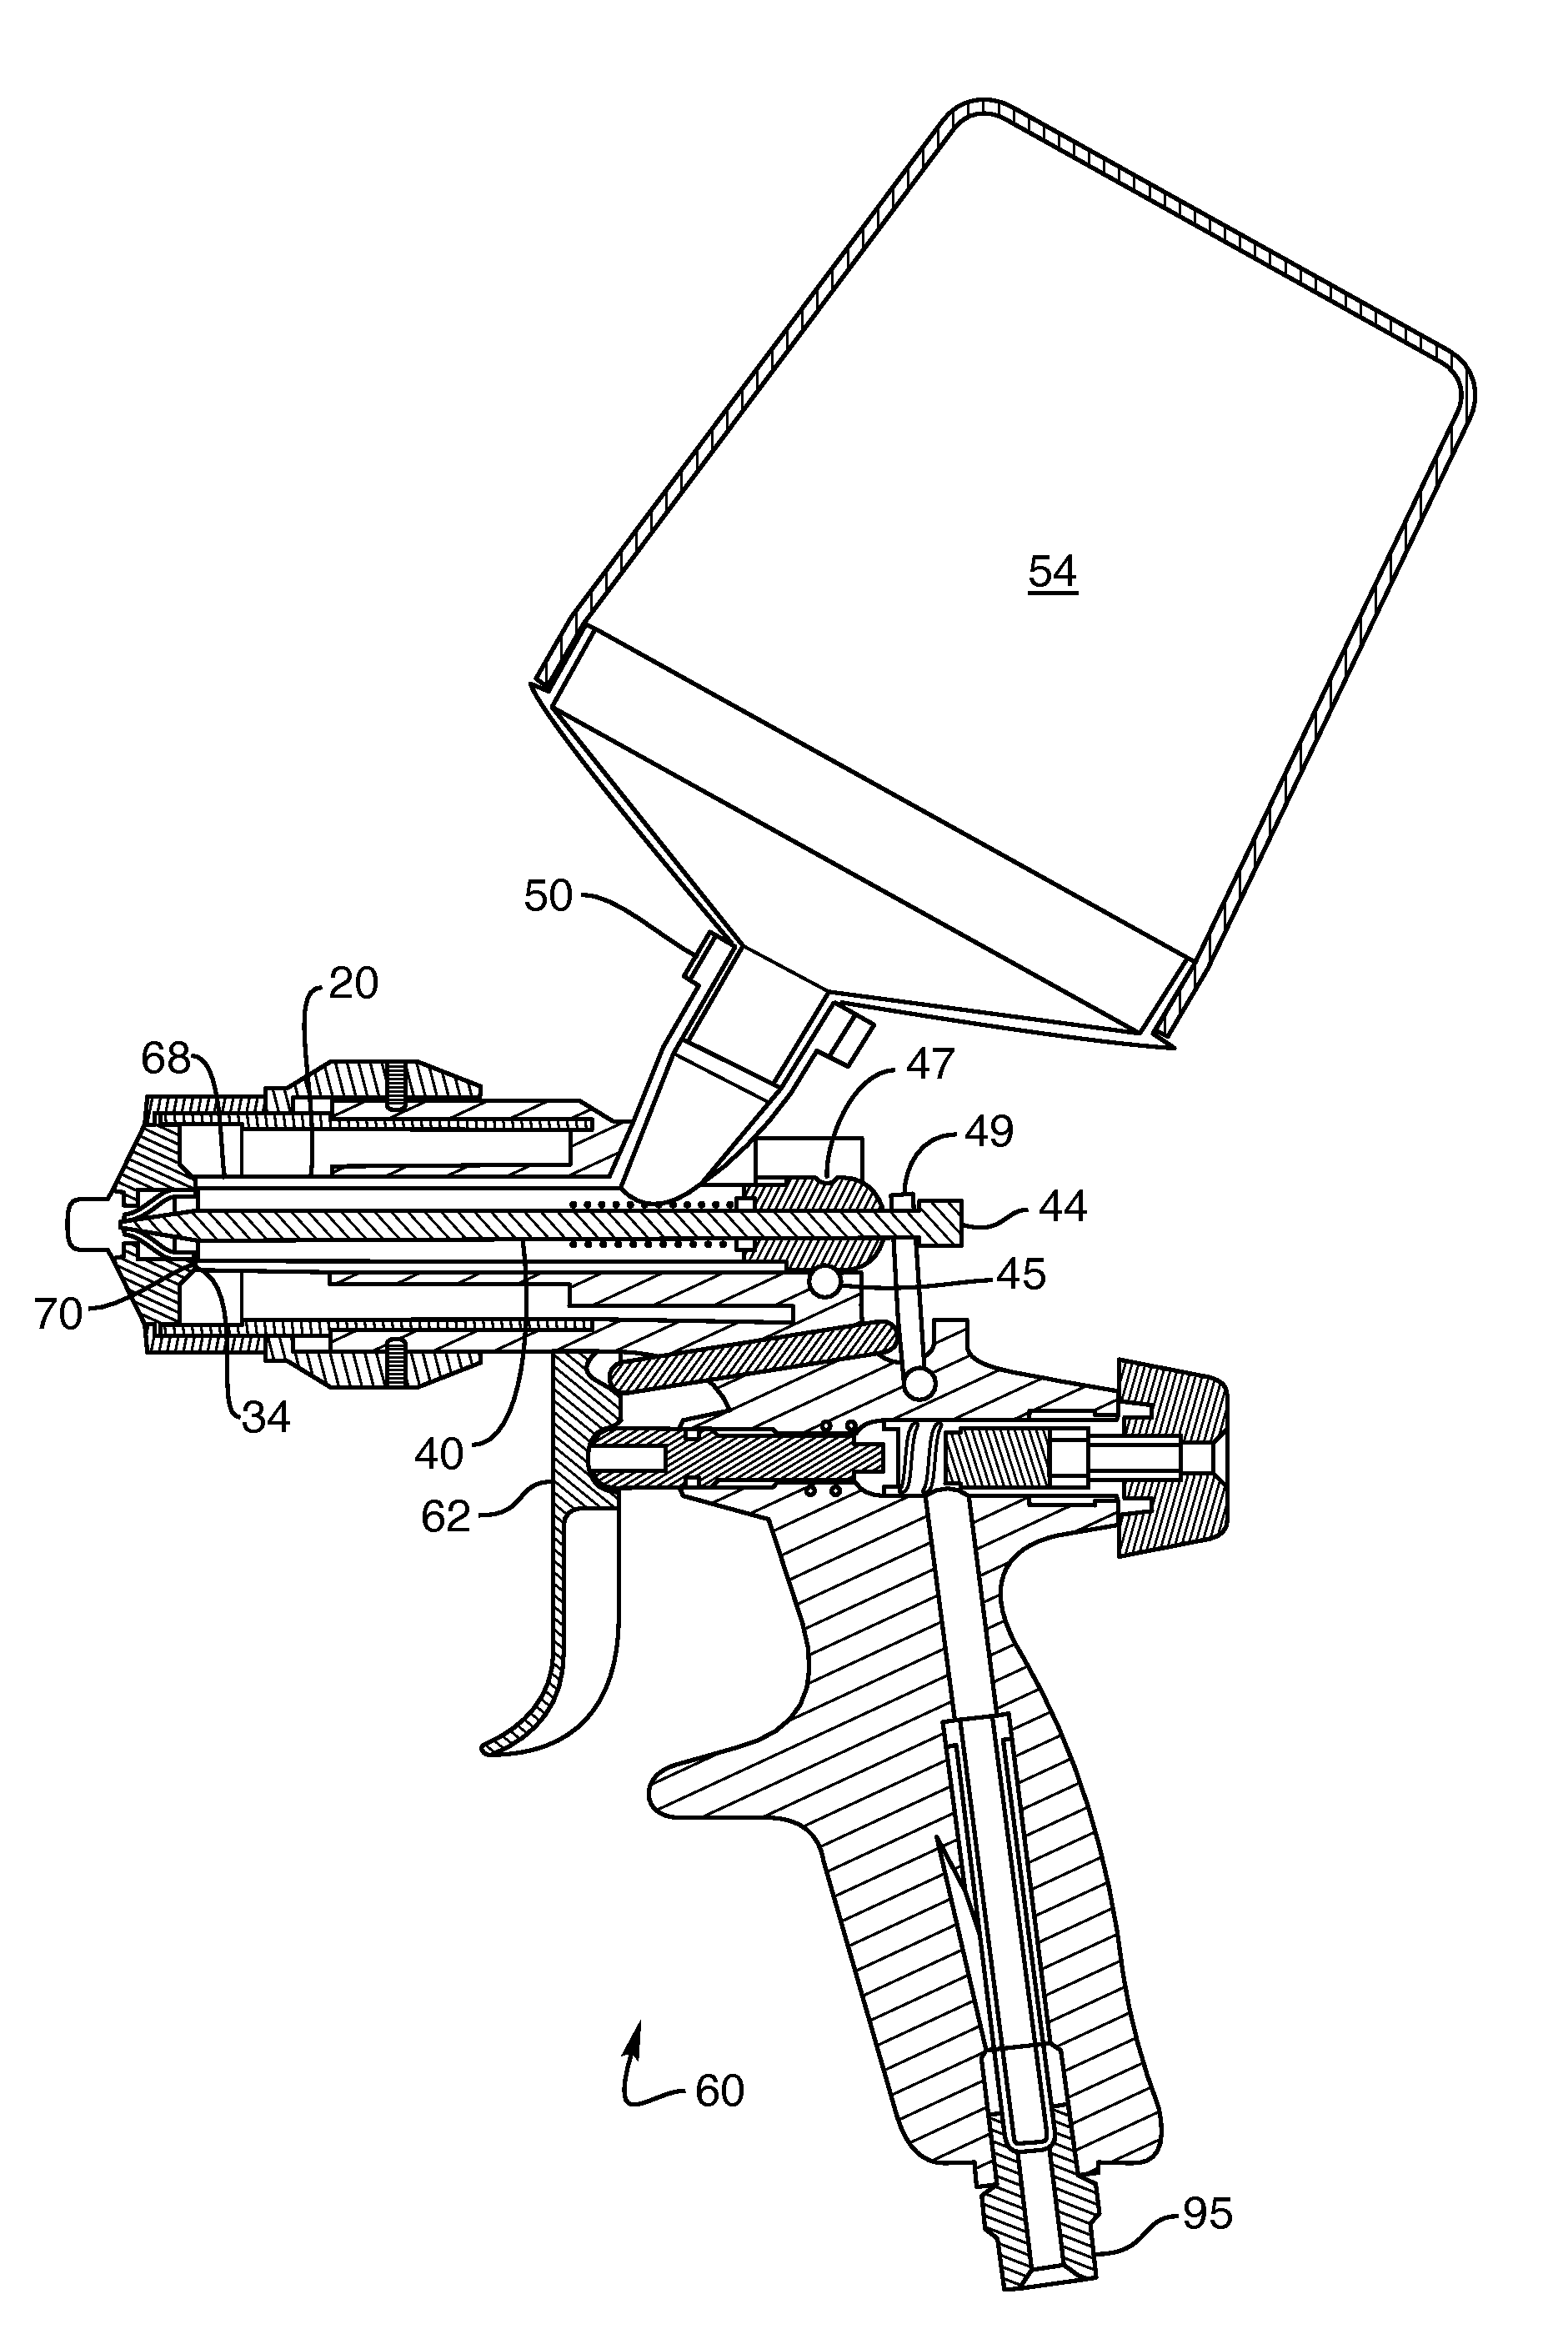 Spray gun with paint cartridge